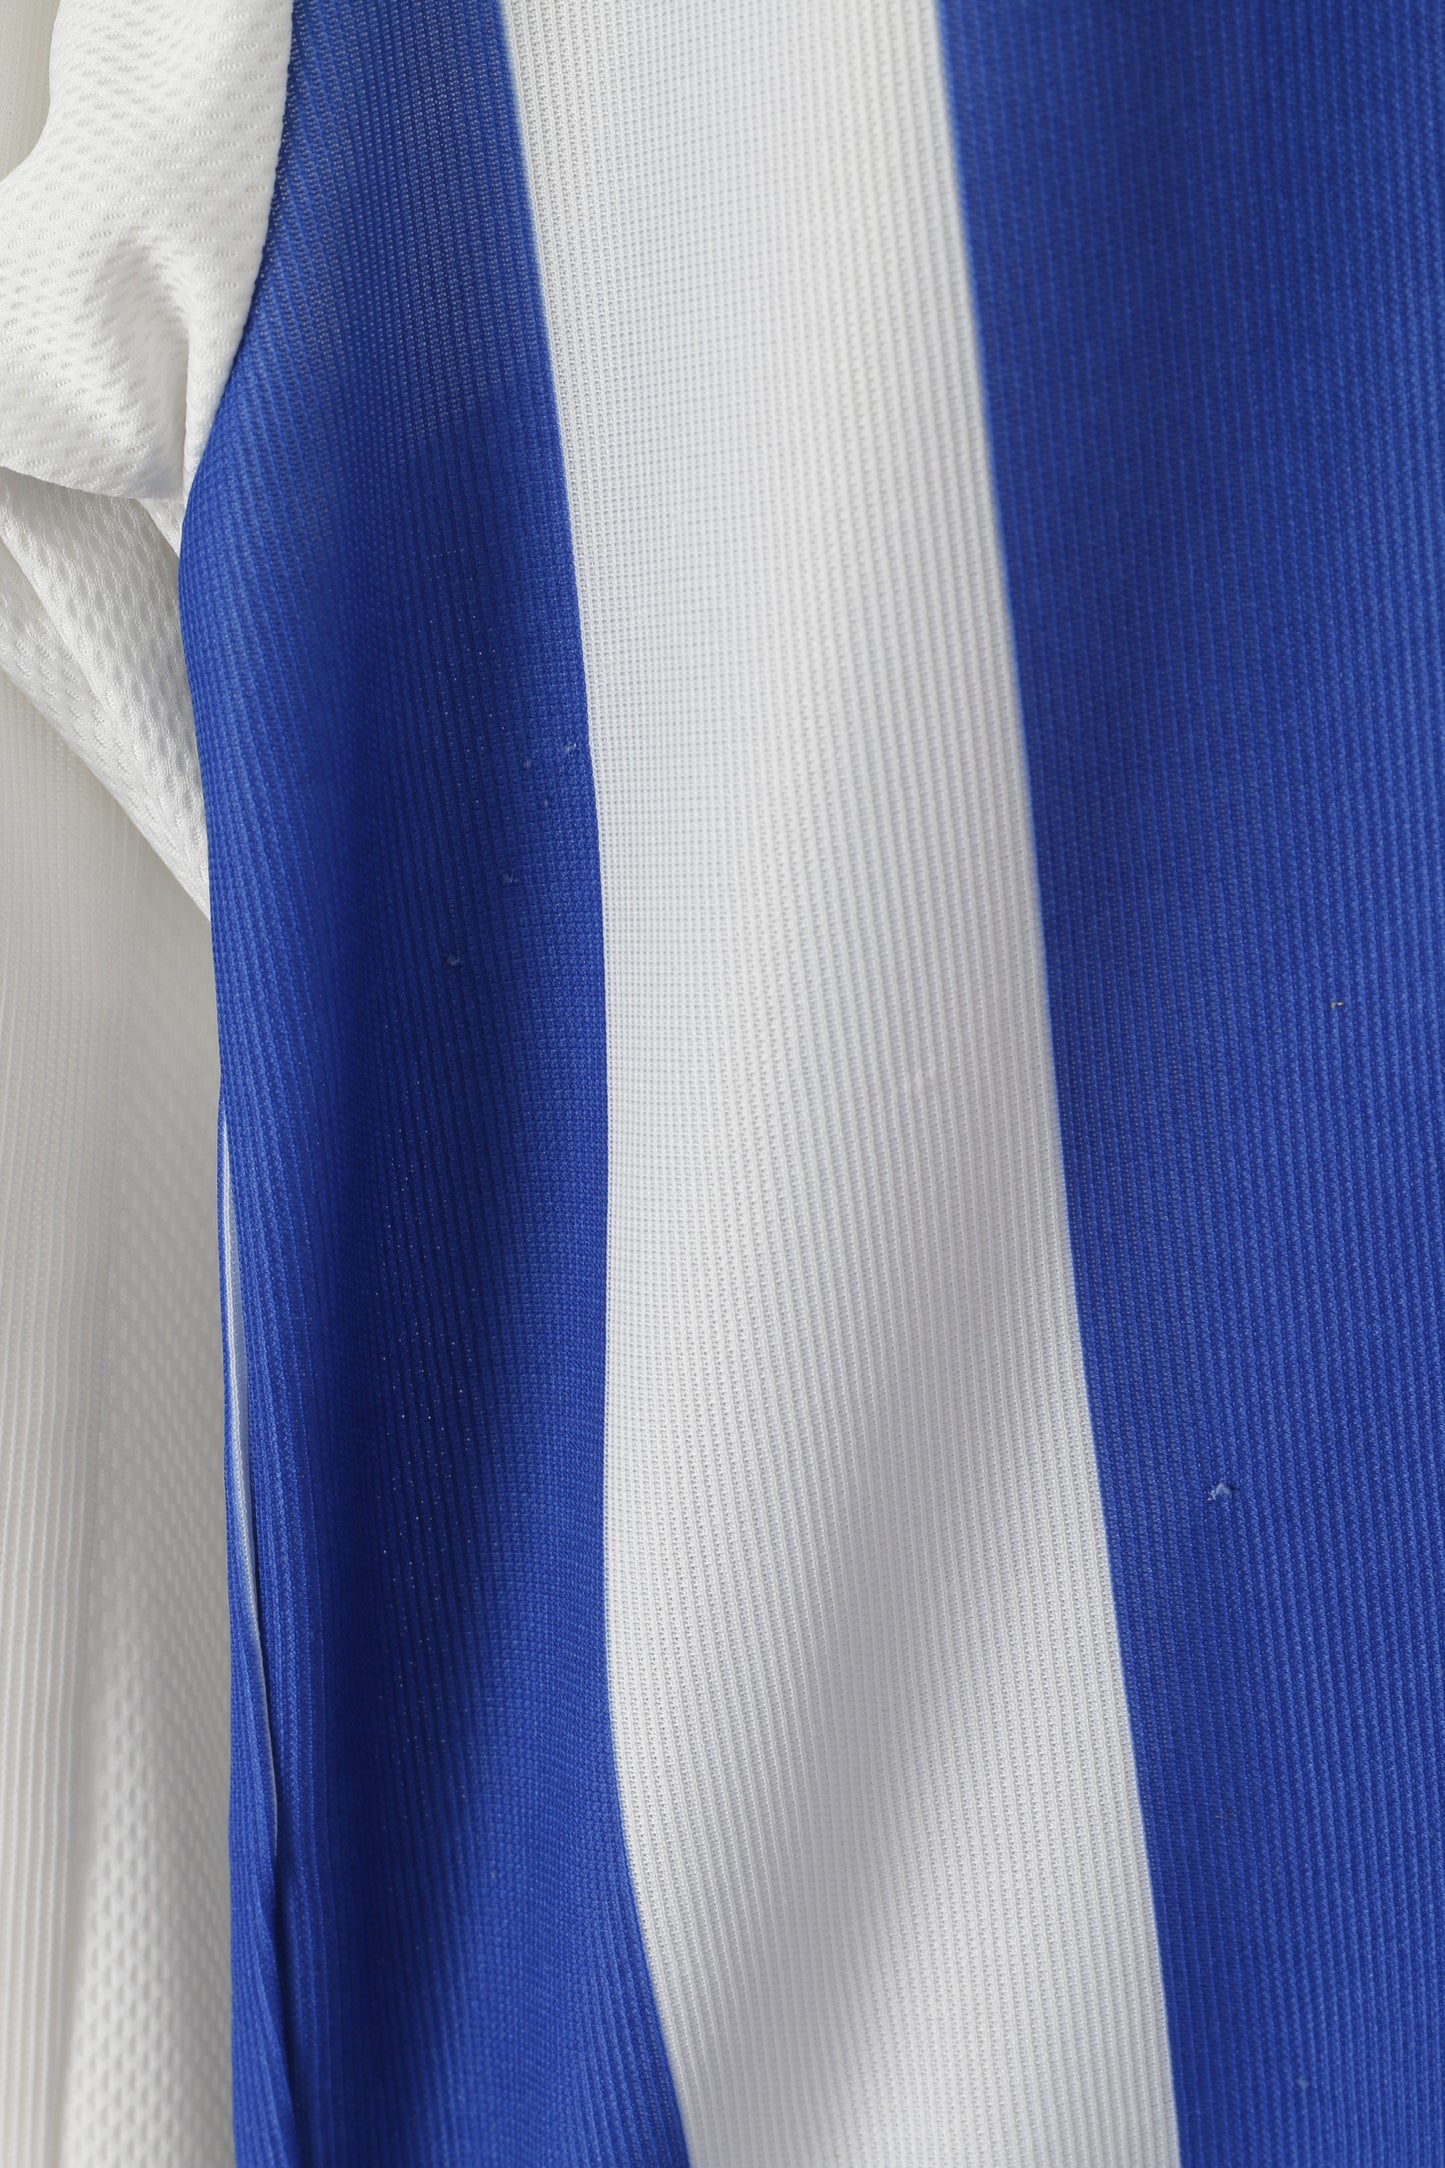 Adidas Polo Homme Bleu Vintage FC Hansa Schwanewede Football #5 Jersey Top